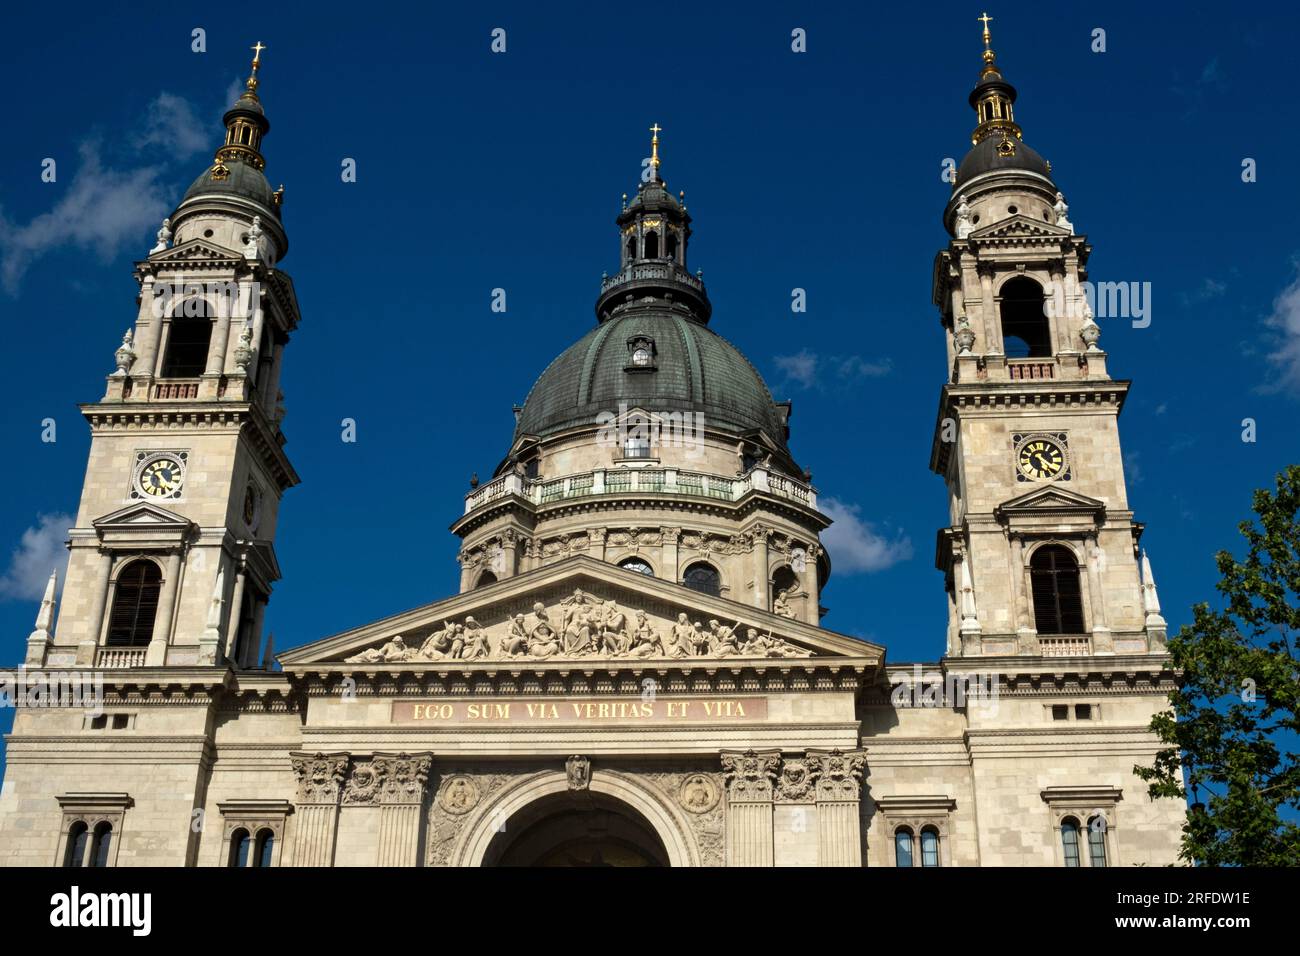 Close-up of St Stephen's Basilica, Budapest, Hungary Stock Photo